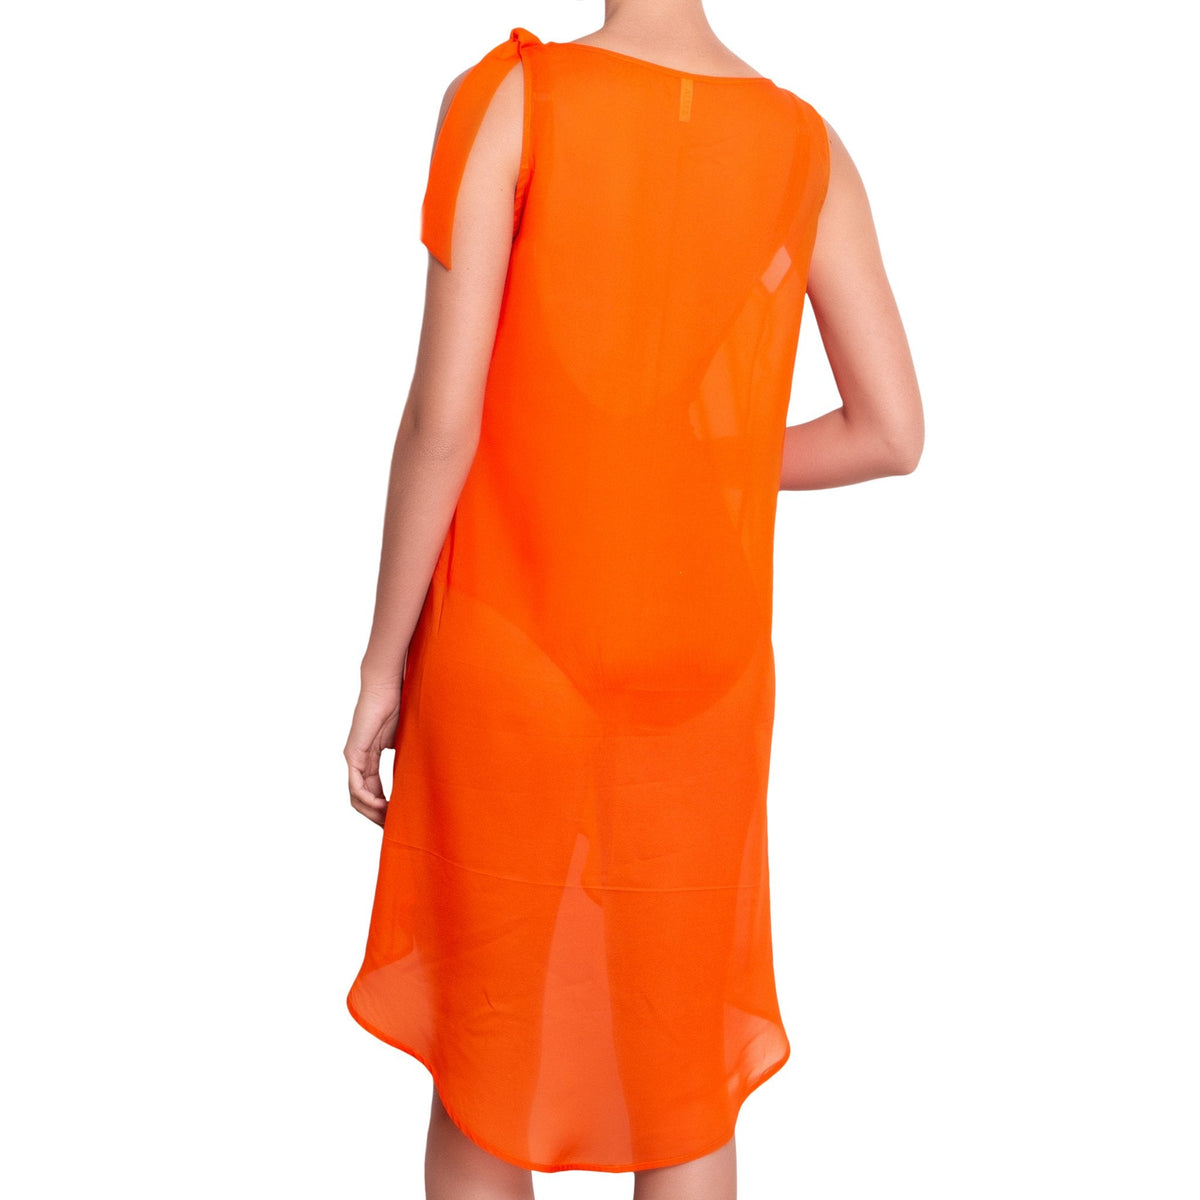 EVA crossed dress, orange chiffon cover up by ALMA swimwear ‚Äì front view 3